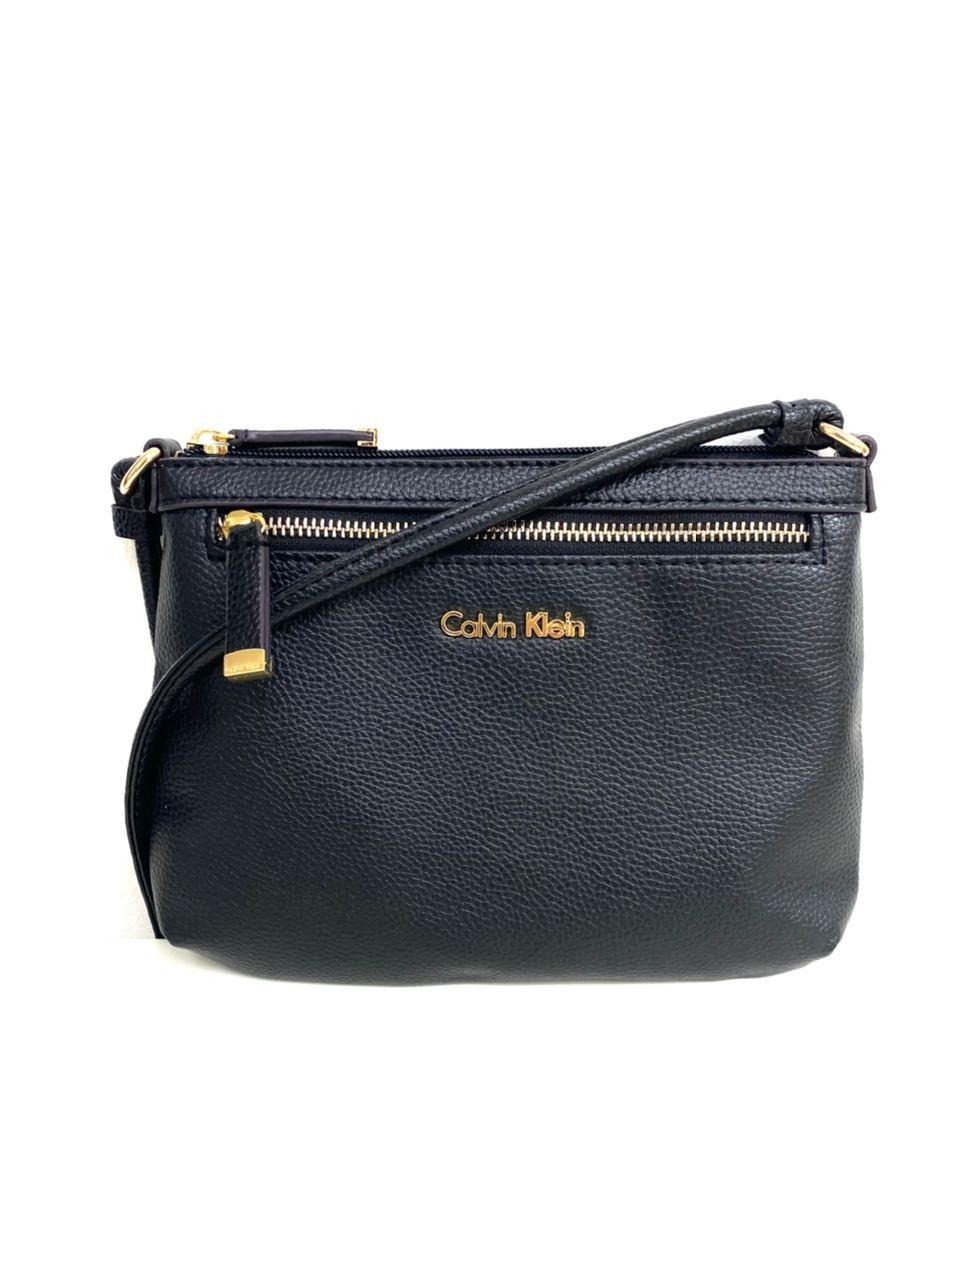 Calvin Klein Womens Bags Signature and Logo Handbags #Macys #CalvinKlein # Handbags #Accessories #Fashion #Trending … | Bags, Calvin klein handbags, Calvin  klein bag